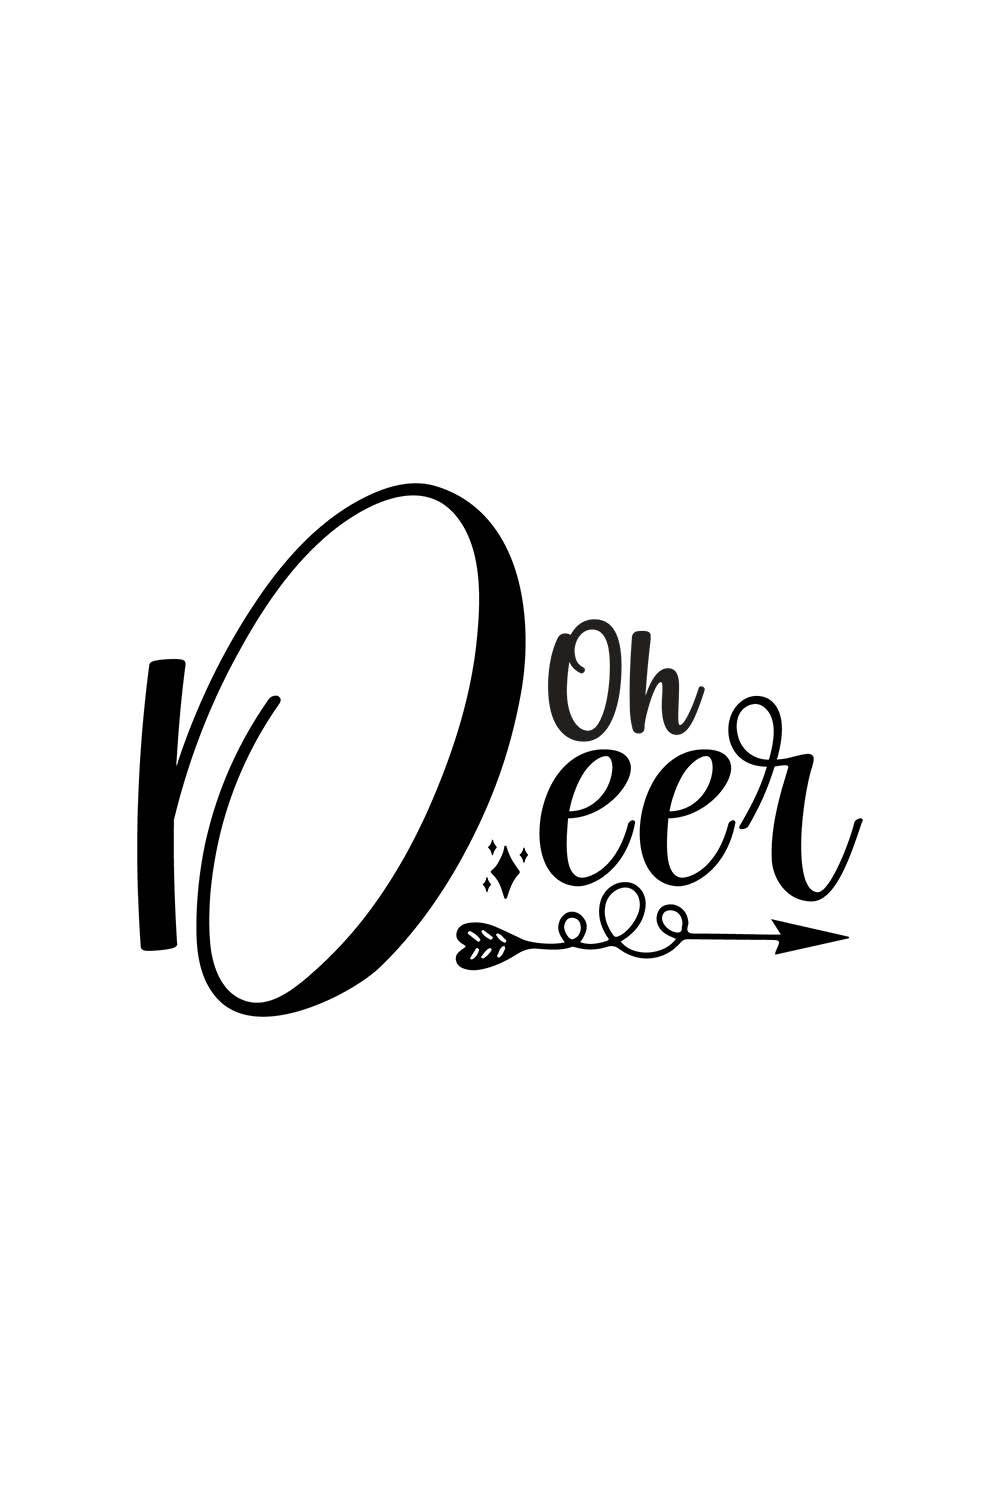 Image with enchanting black lettering for Oh Deer prints.